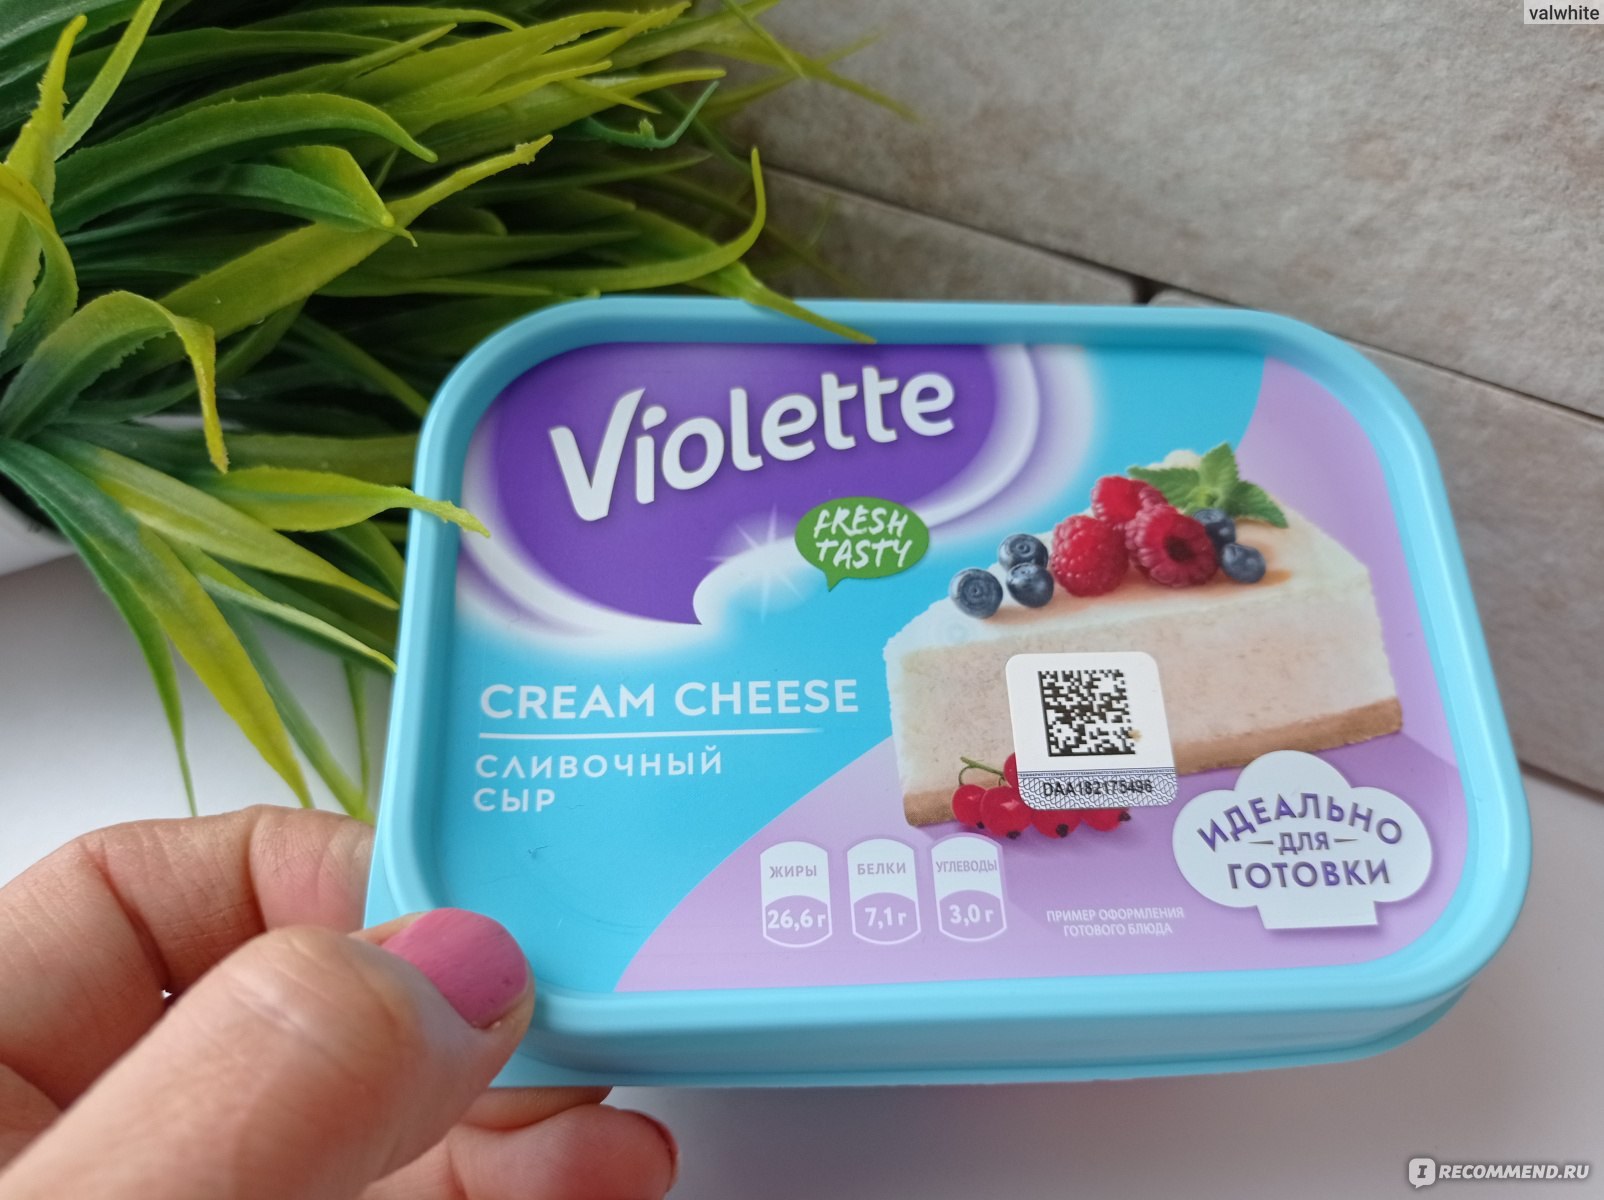 Крем чиз отзывы. Сливочный сыр Violette Cream Cheese. Карат Violette Cream Cheese. Карат Violette Cream Cheese сливочный. Крем чиз Виолетте.